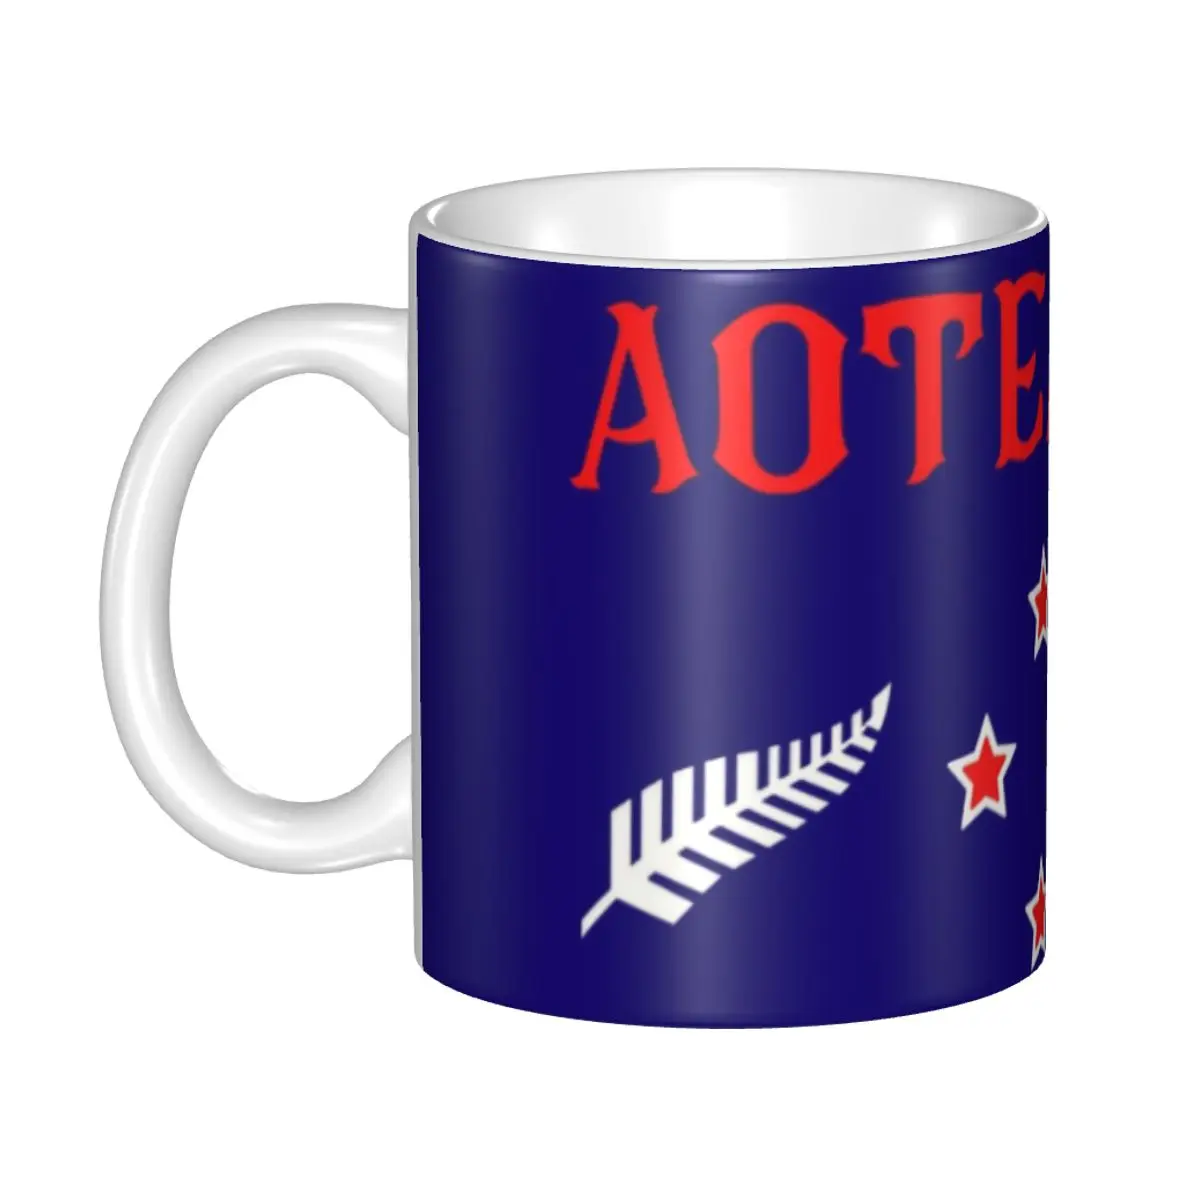 Stars Of New Zealand Aotearoa Coffee Mug DIY Customized Flag Ceramic Milk Tea Mug Outdoor Work Camping Cups And Mugs